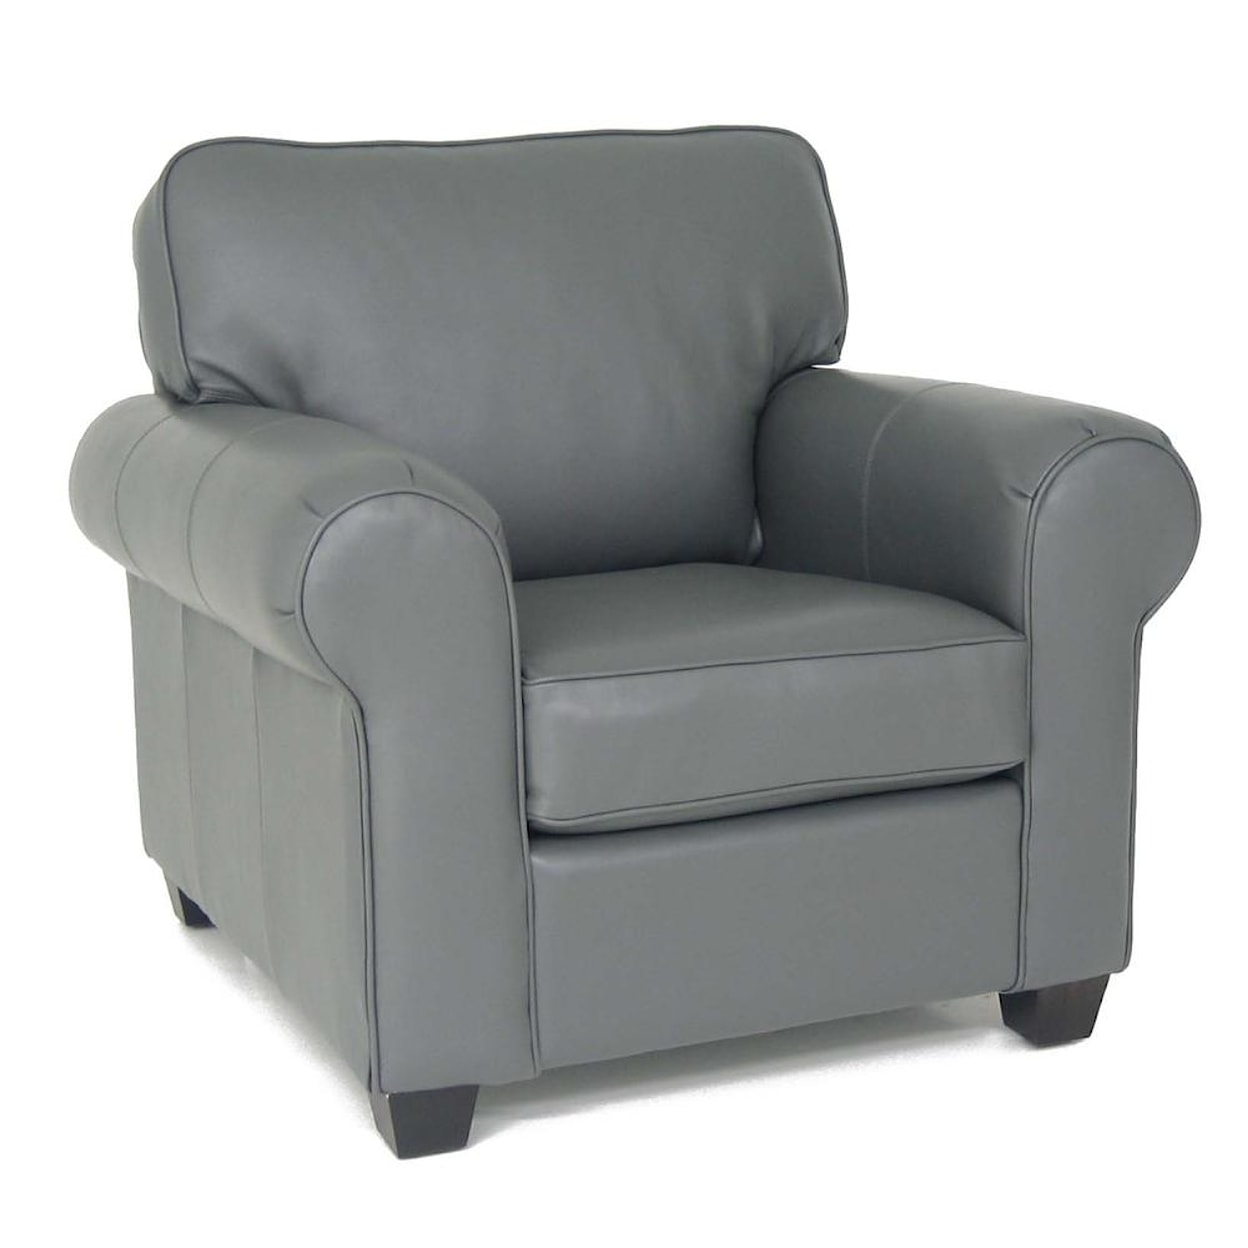 Taelor Designs Porter Chair